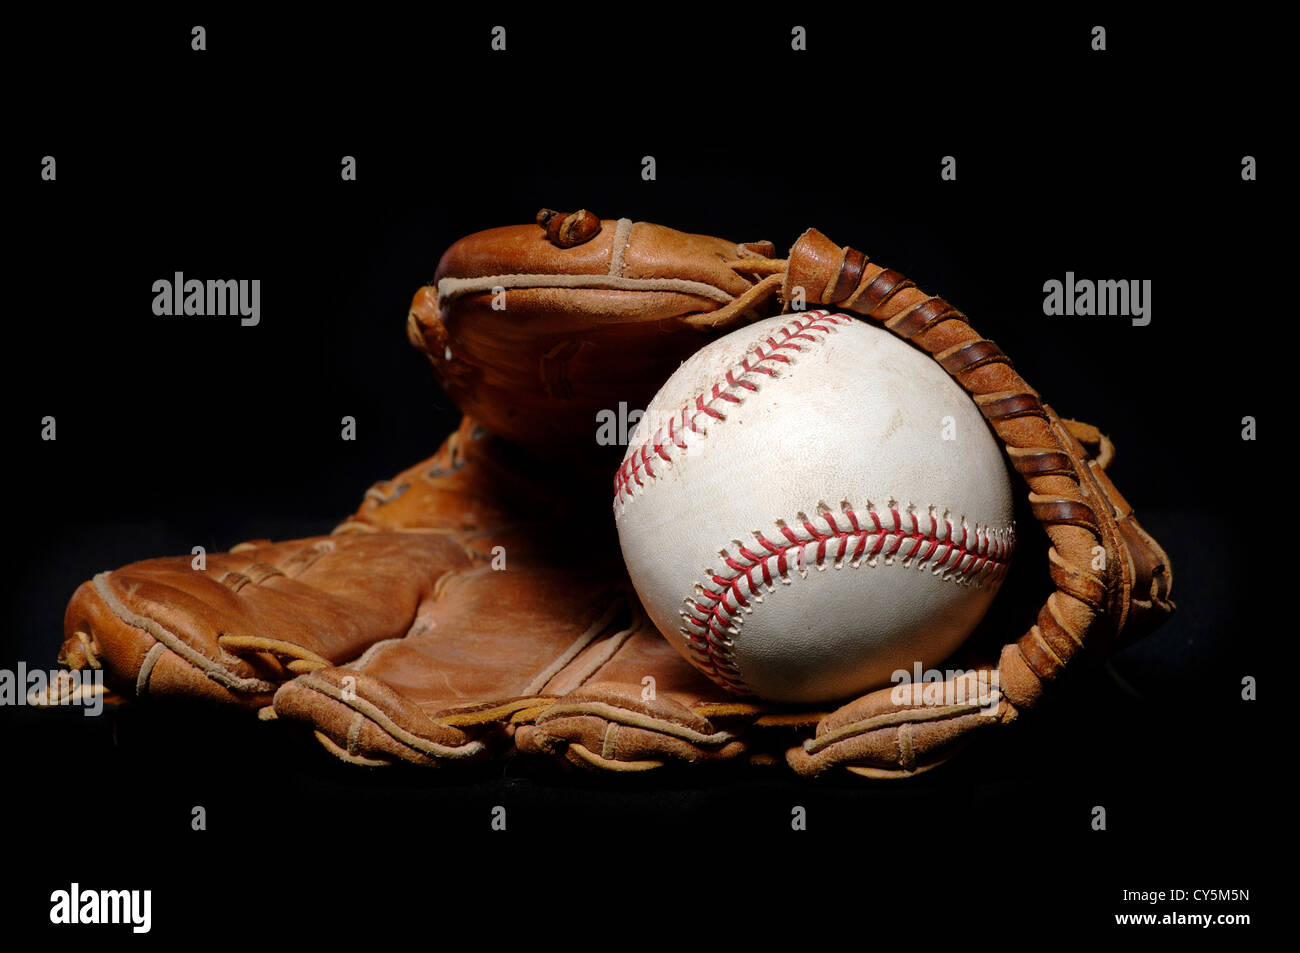 Baseball and Glove on Black Stock Photo